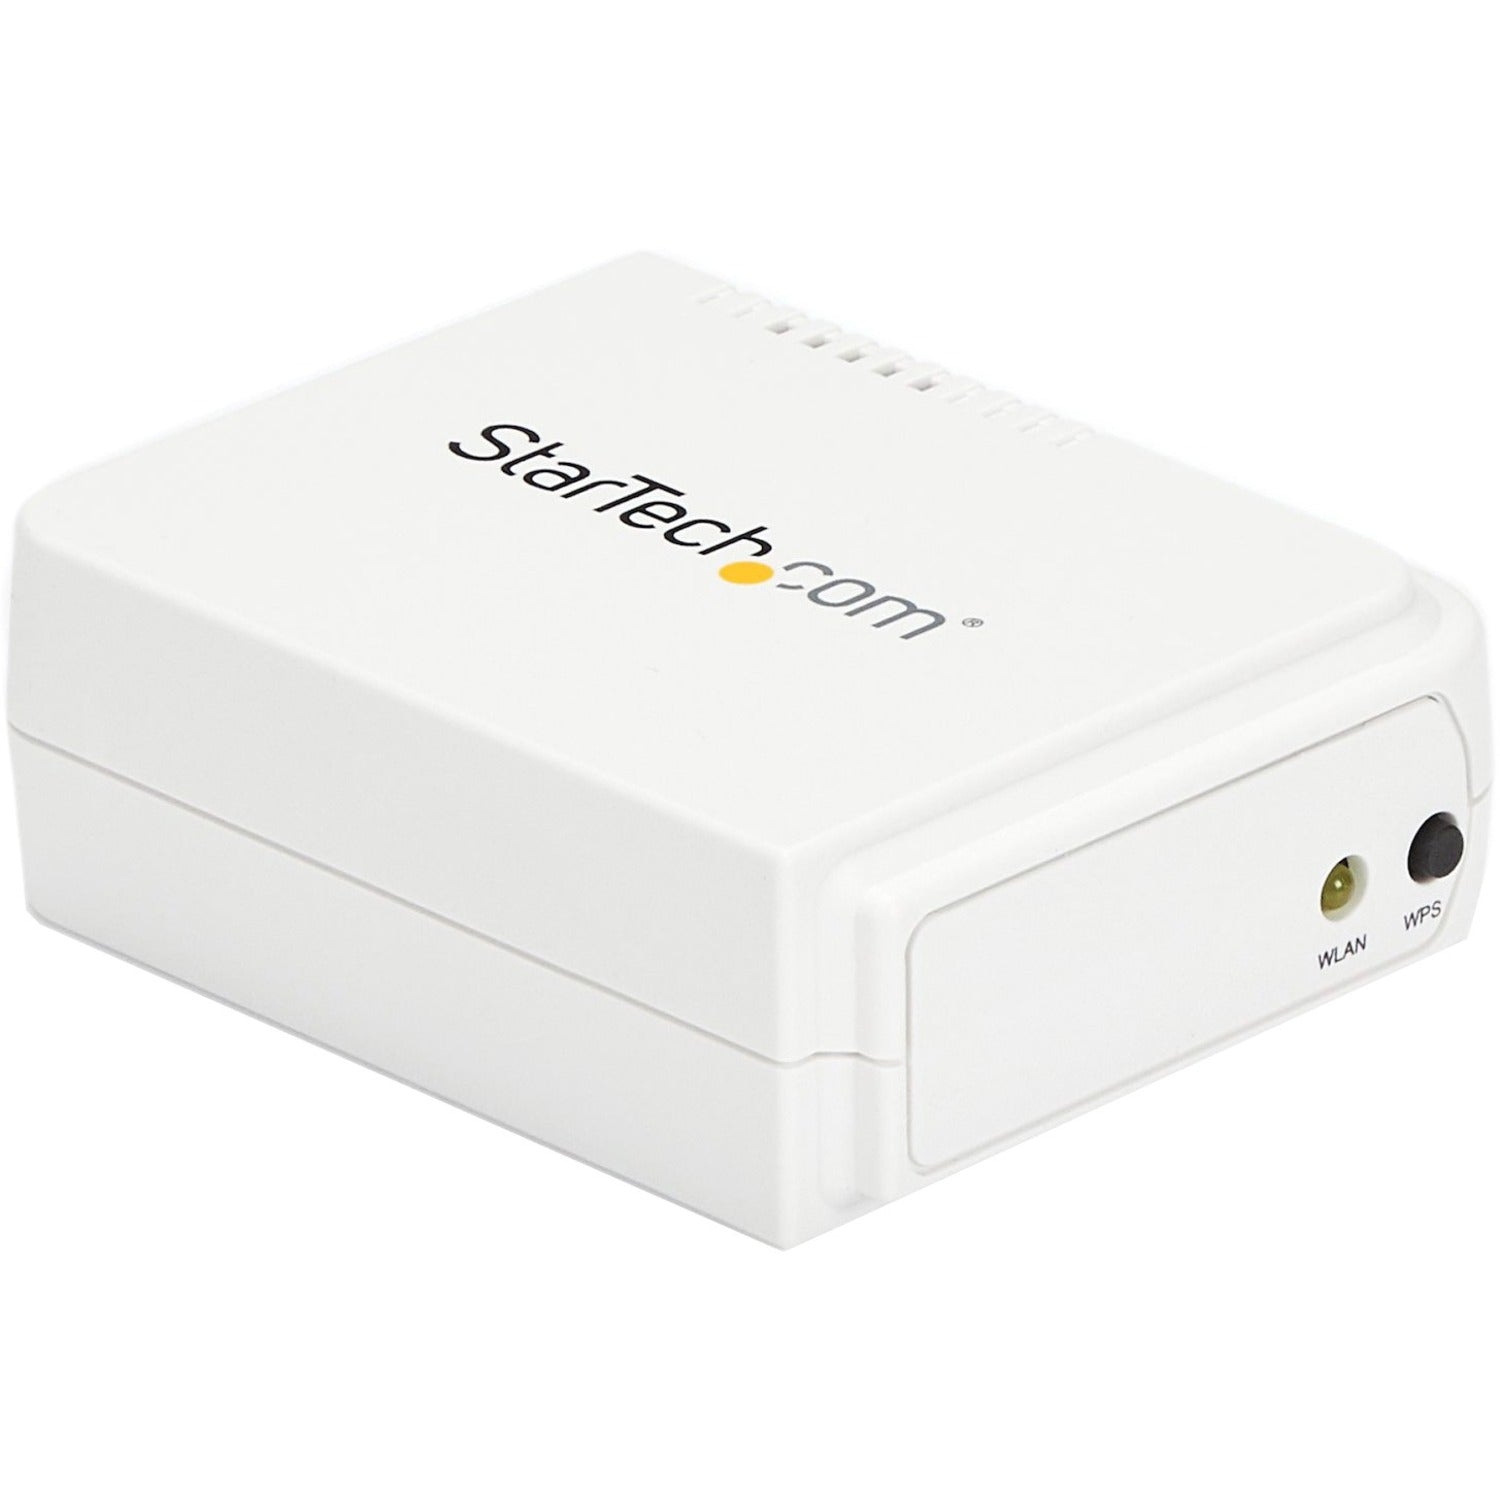 StarTech.com 1 Port USB Wireless N Network Print Server with 10/100 Mbps Ethernet Port - 802.11 b/g/n - PM1115UW